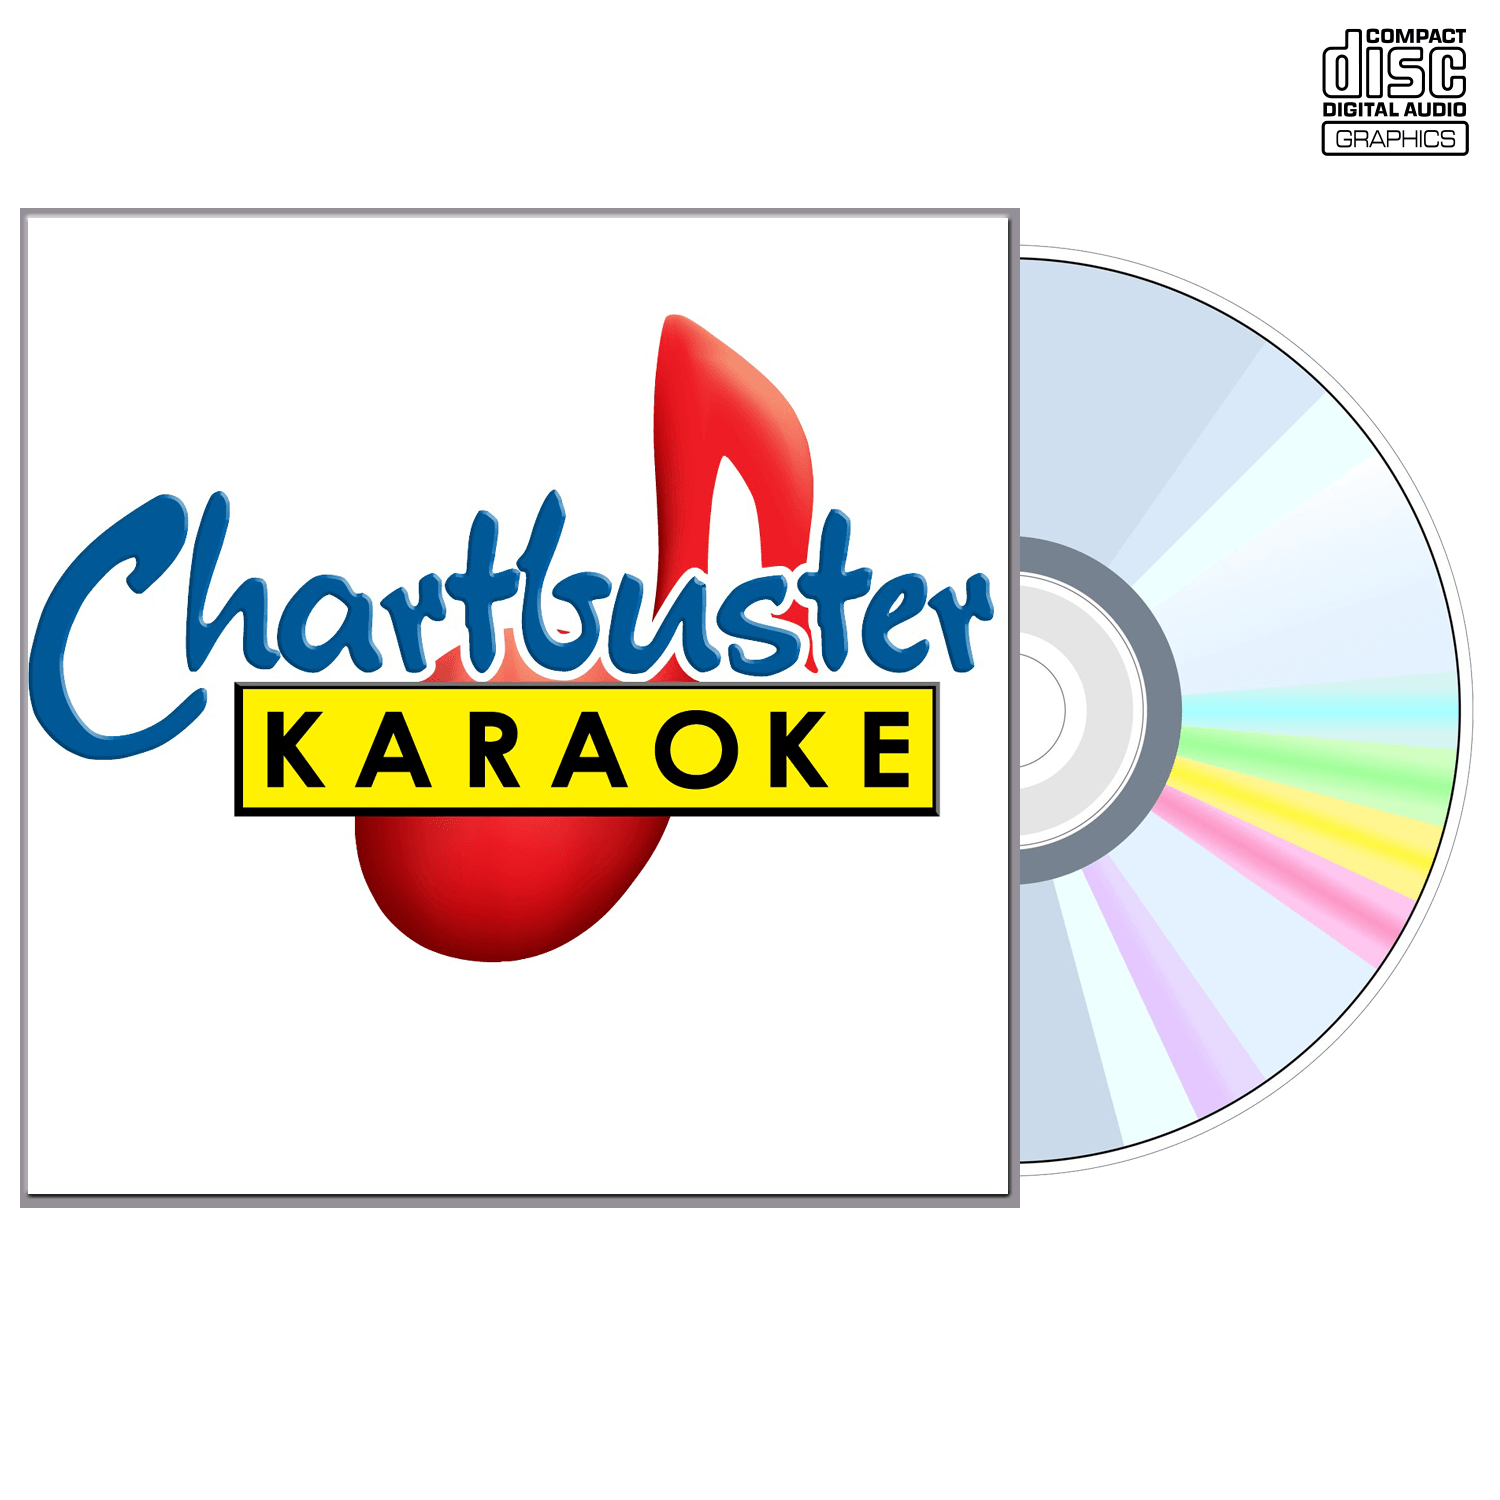 Country Collection Vol 4 - CD+G - Chartbuster Karaoke - Karaoke Home Entertainment